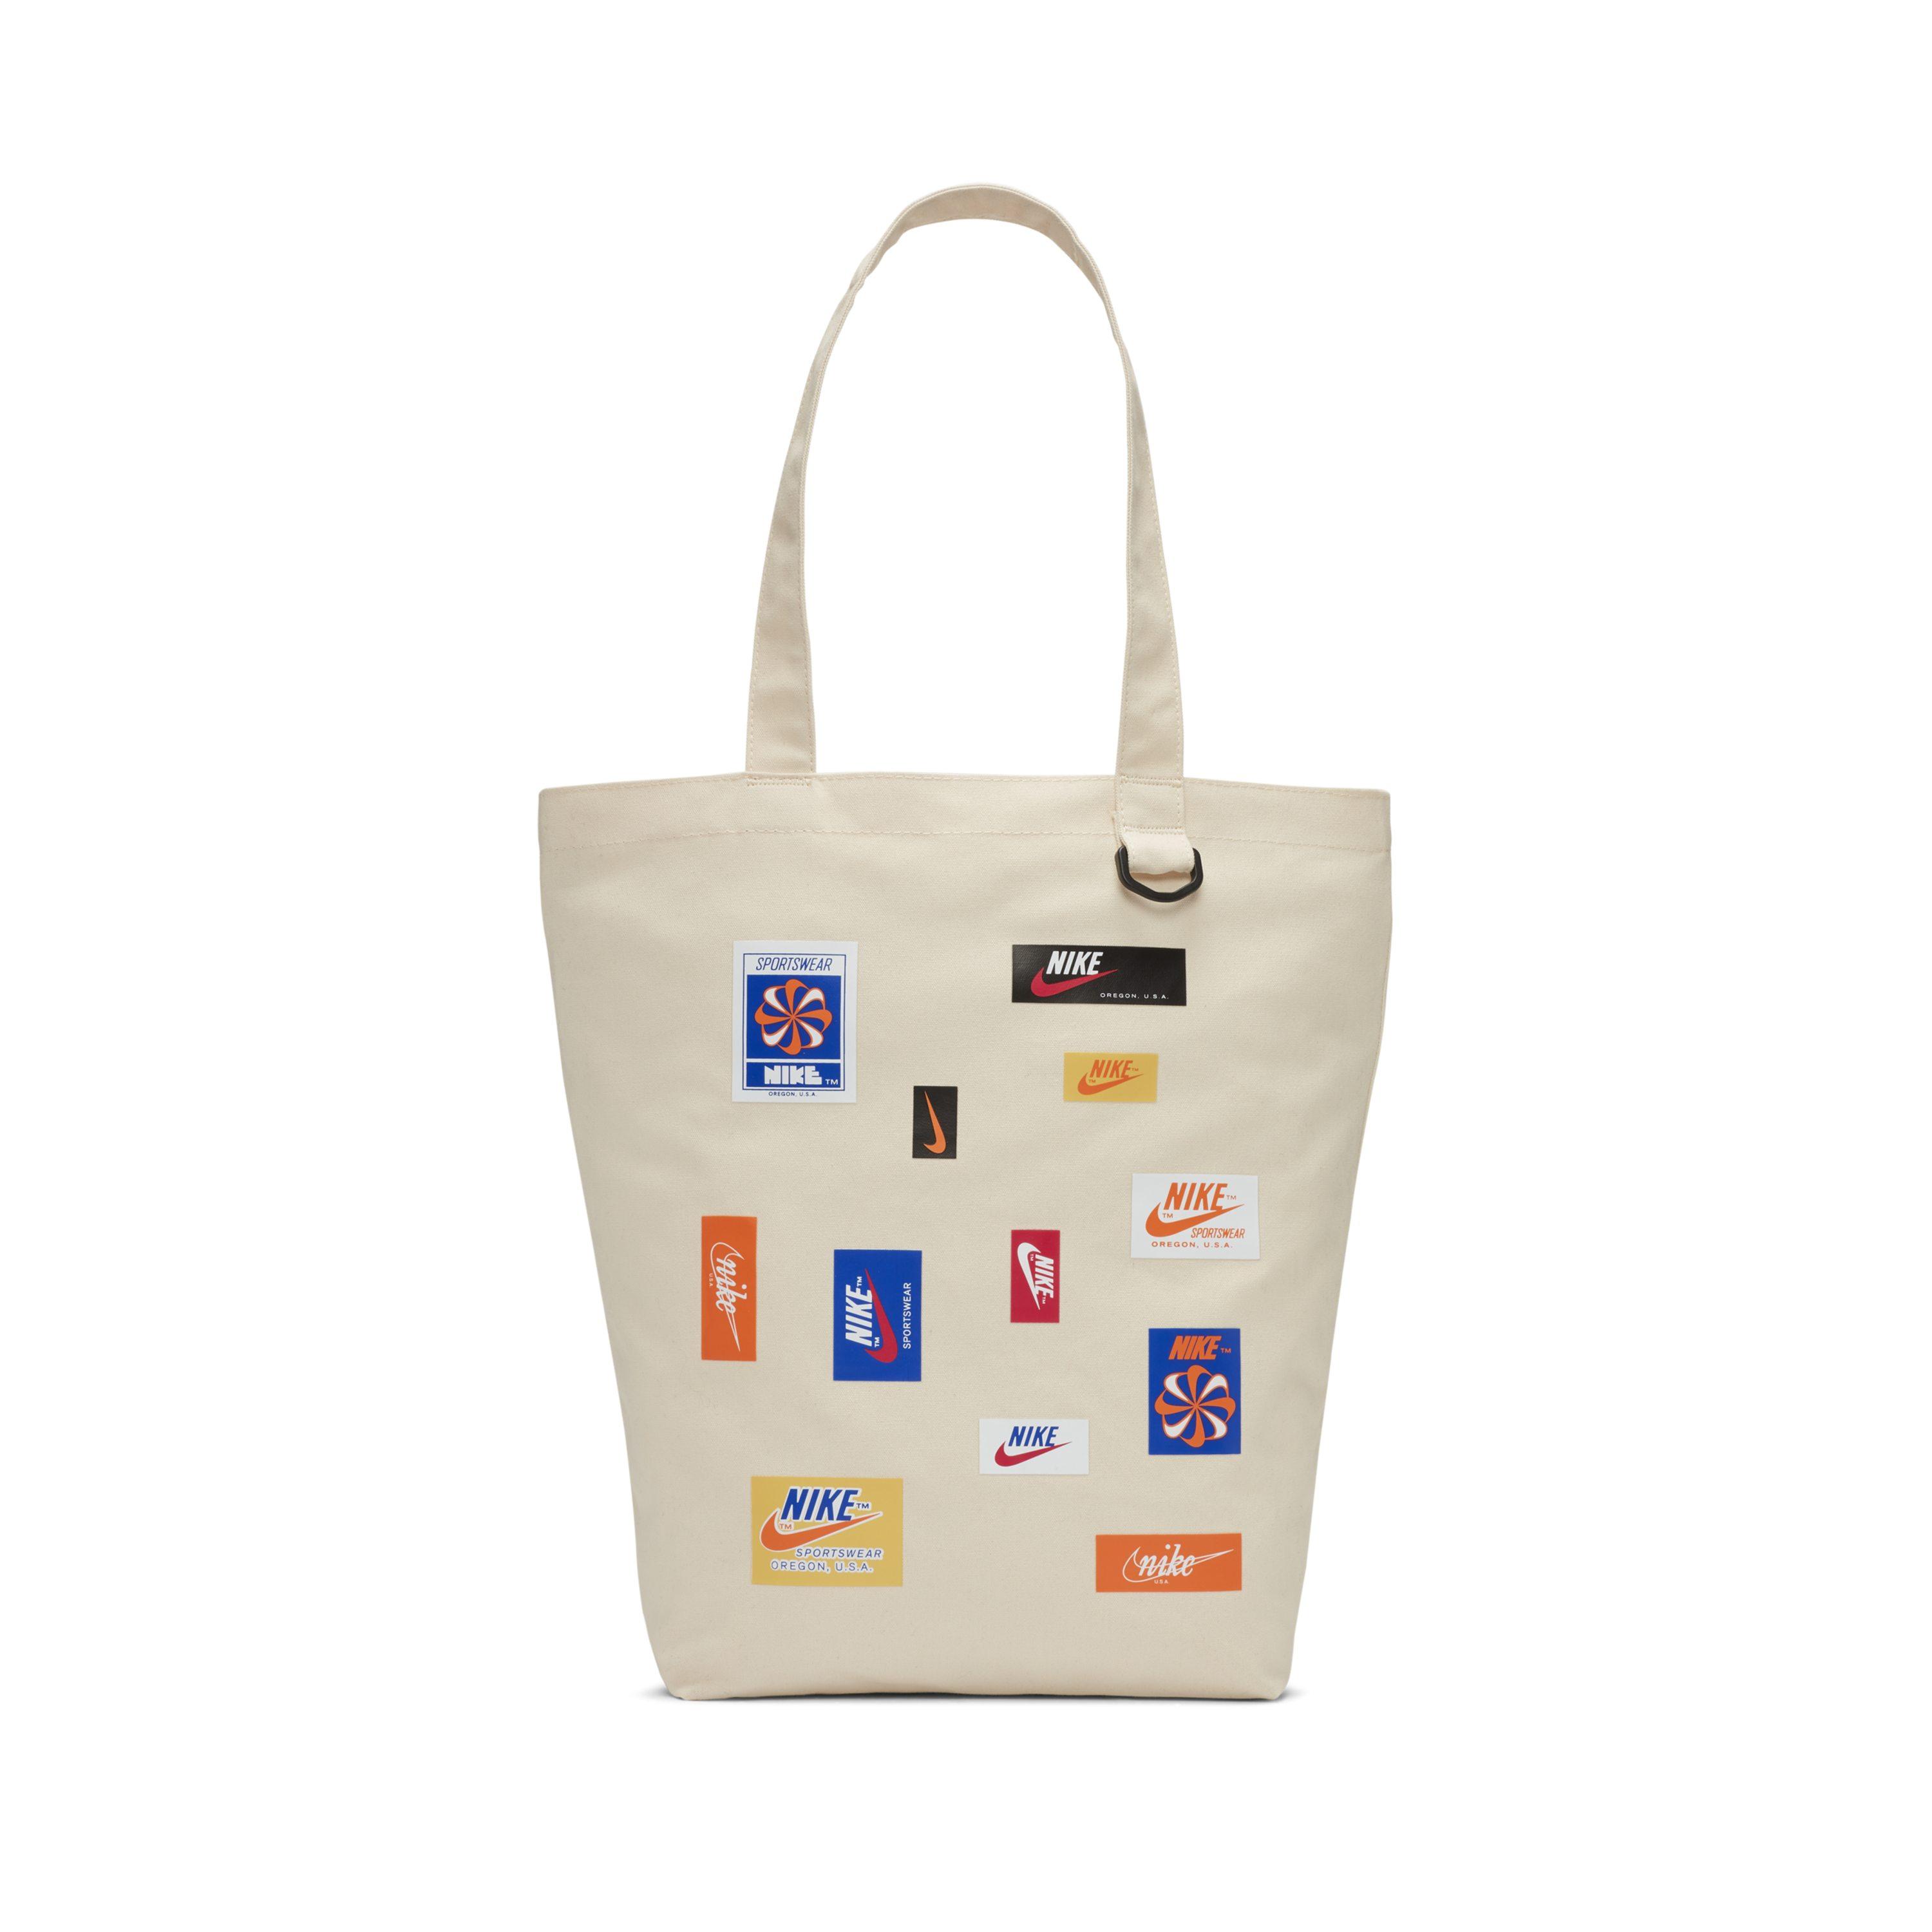 nike cream tote bag | Shop The Best Discounts Online | avsenggcollege.ac.in